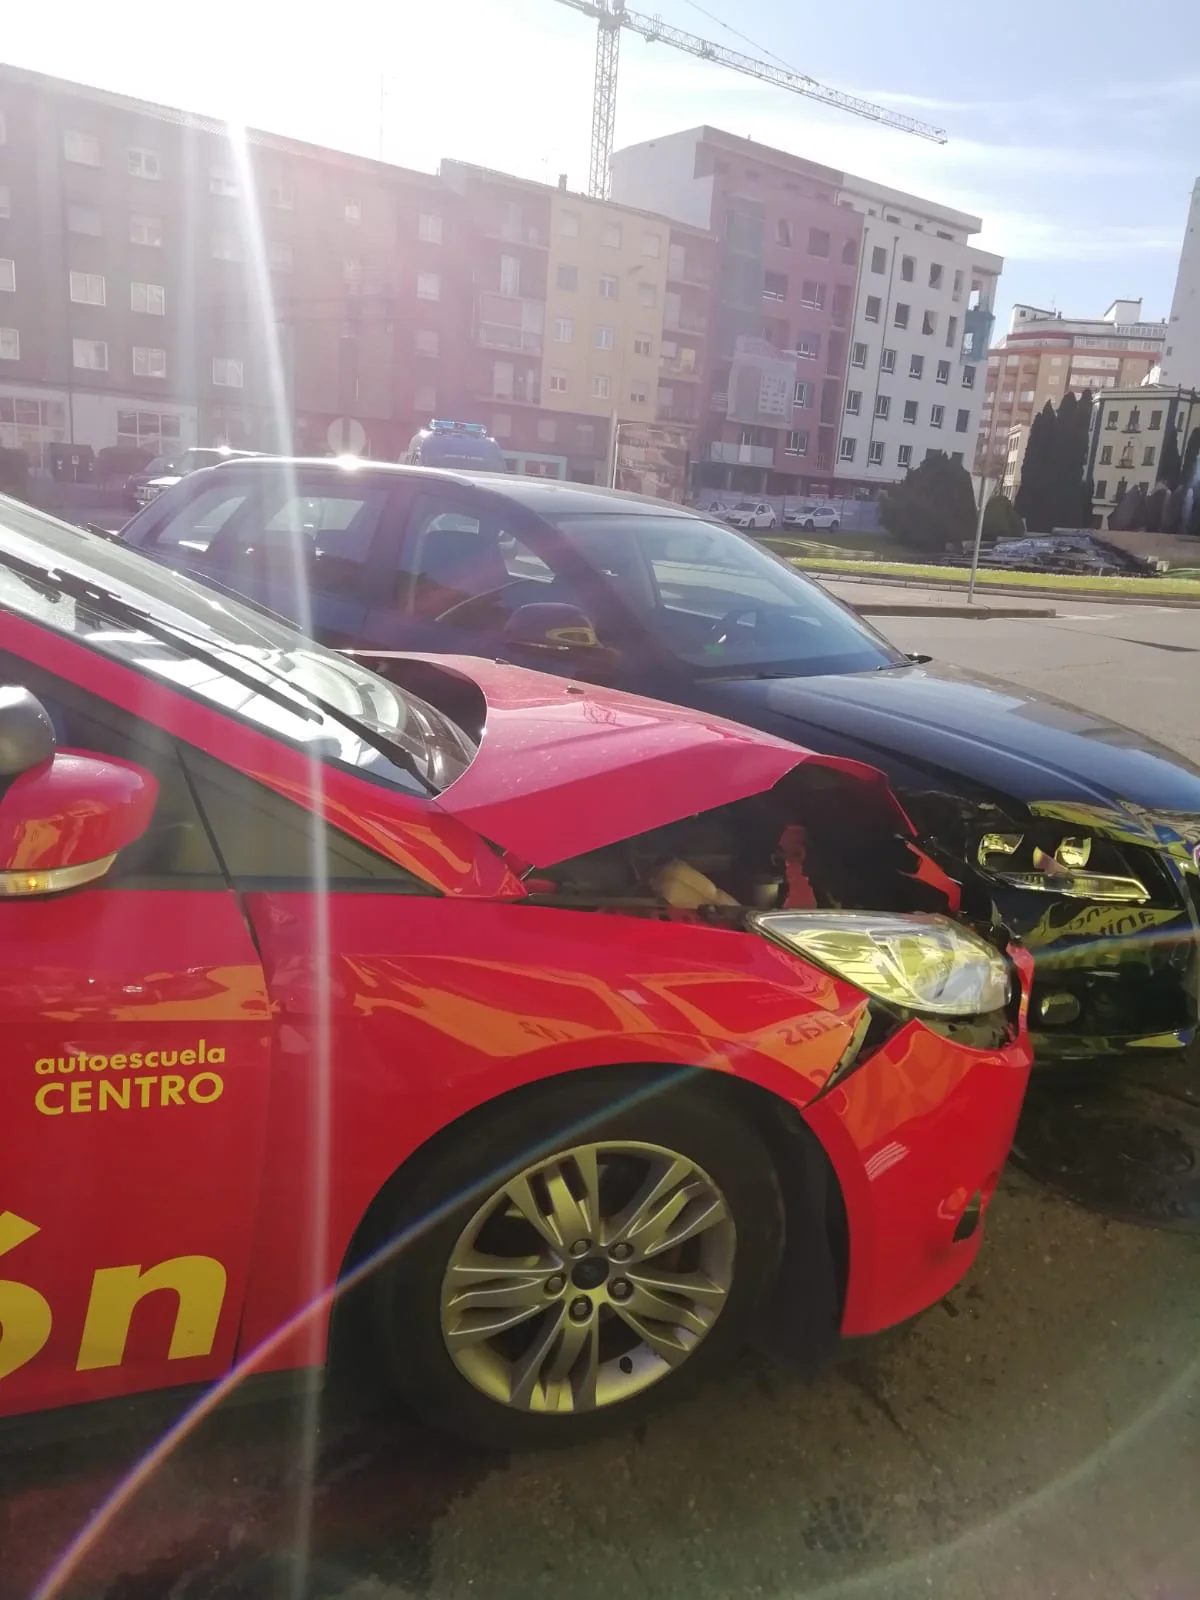 Fotos: Se empotra contra un coche de autoescuela en León capital